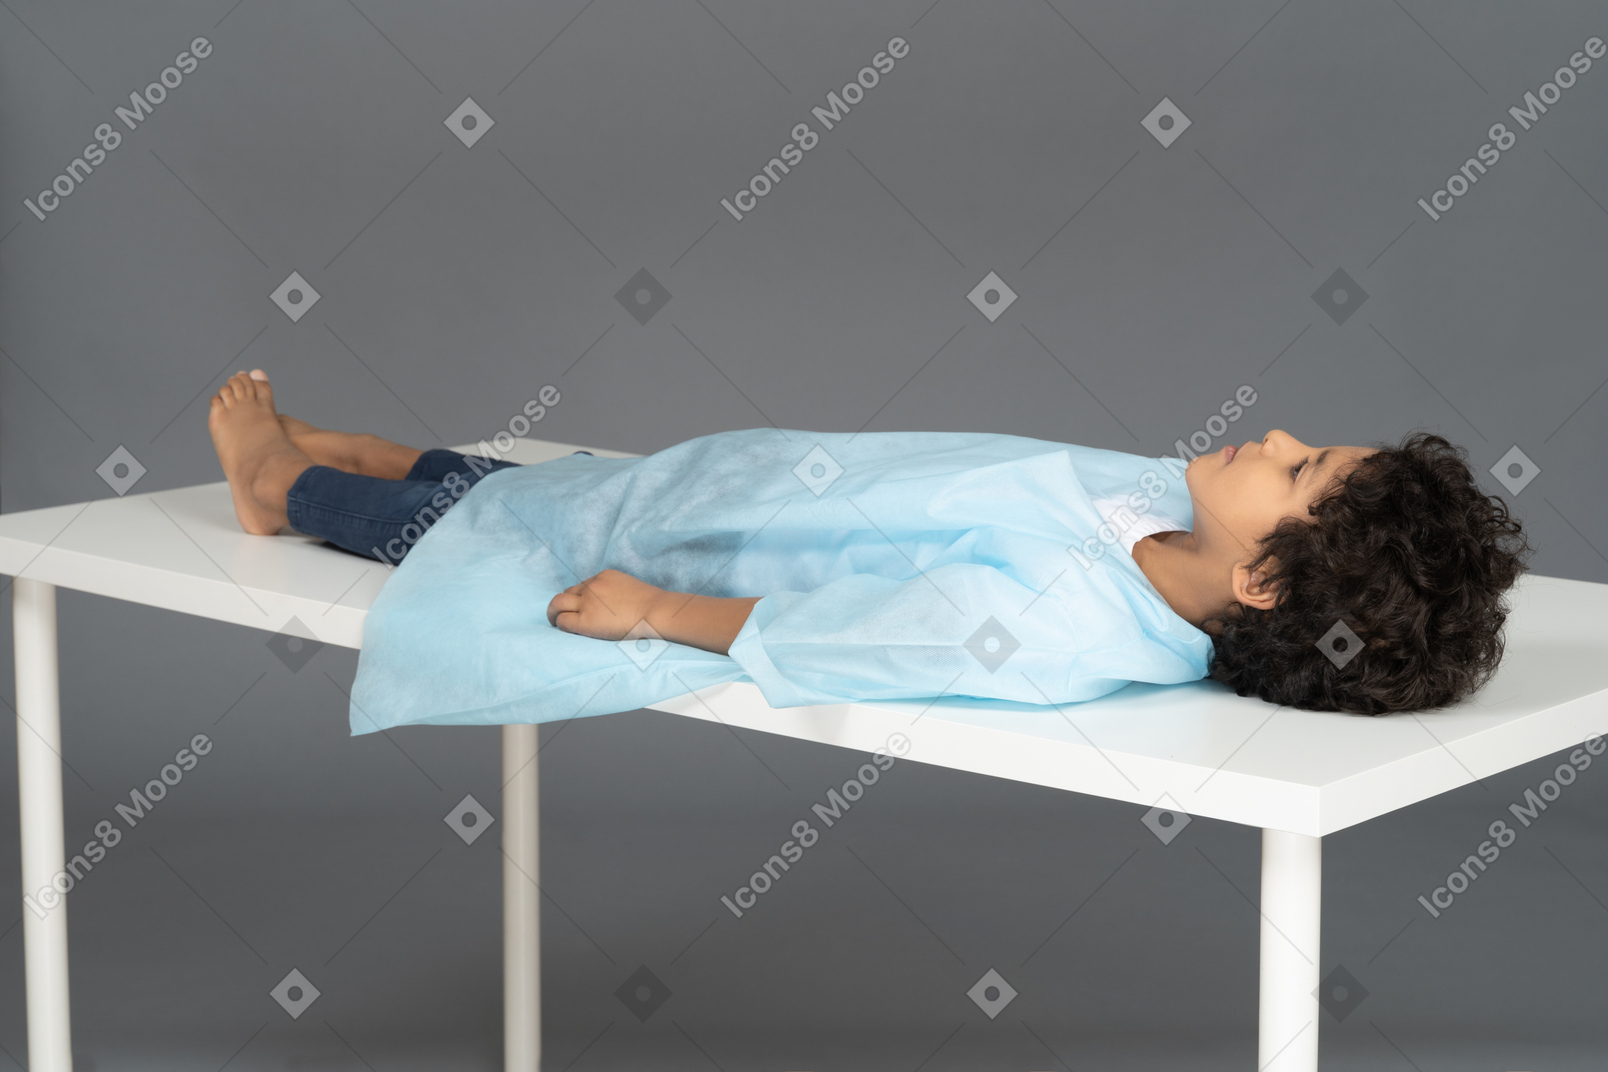 Little boy lying on the table